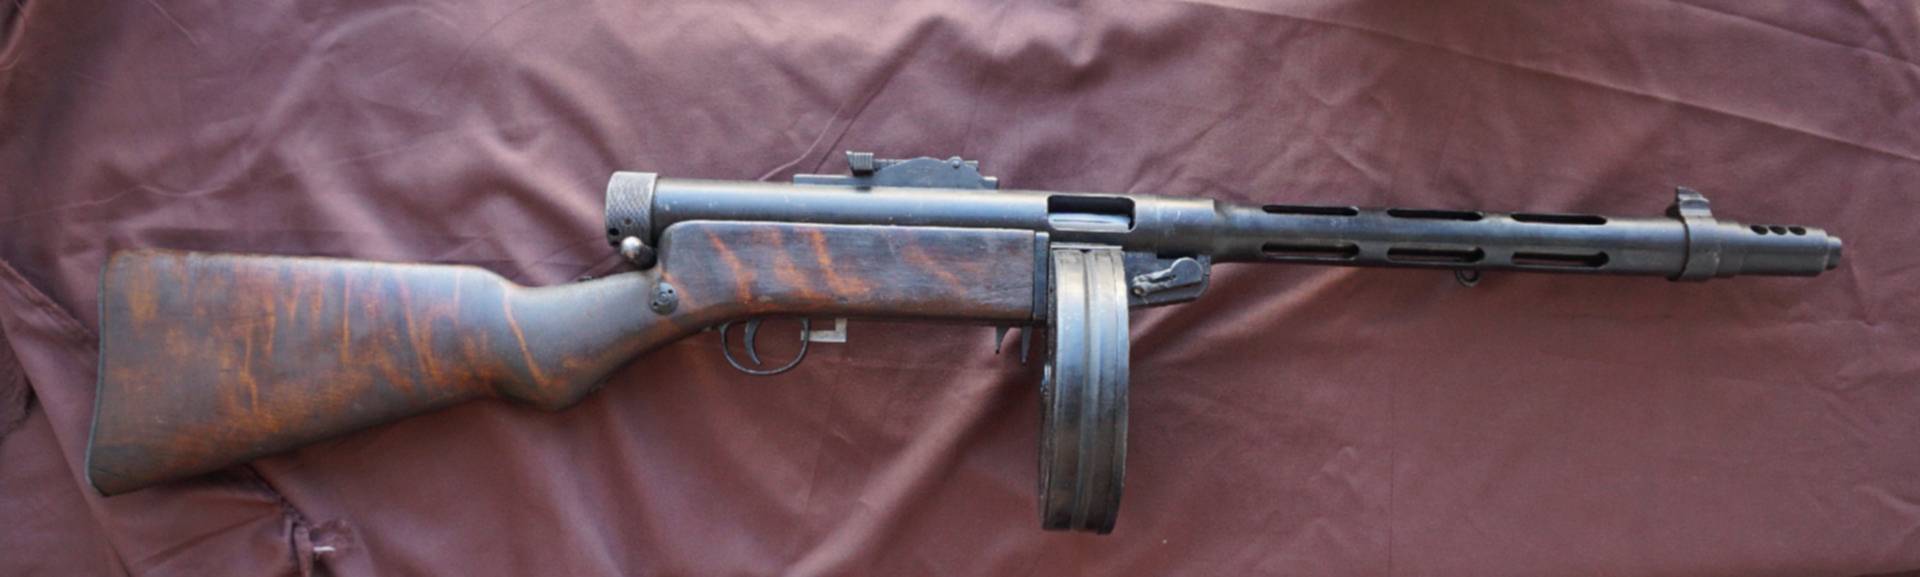 ММГ пистолет-пулемёт Suomi M/31. 